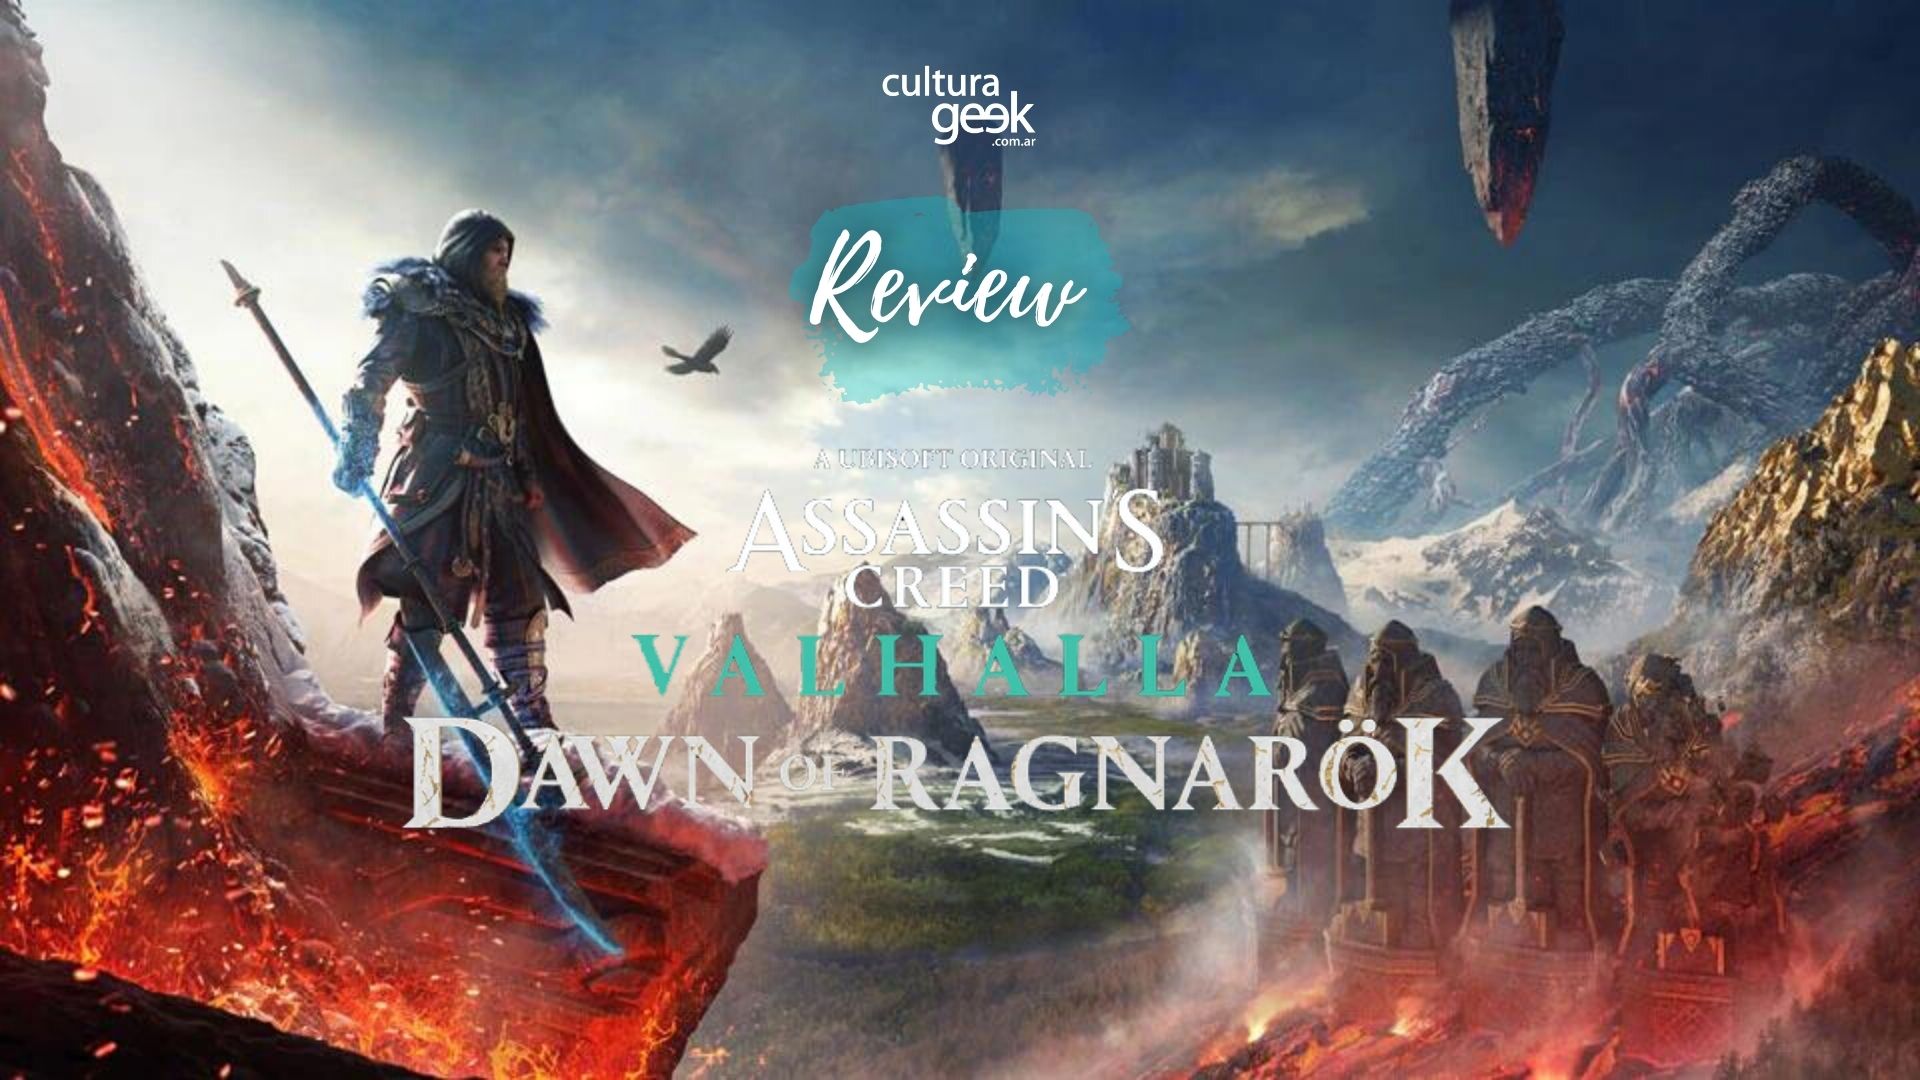 Valhalla review Dawn of ragnarok Assassins Creed